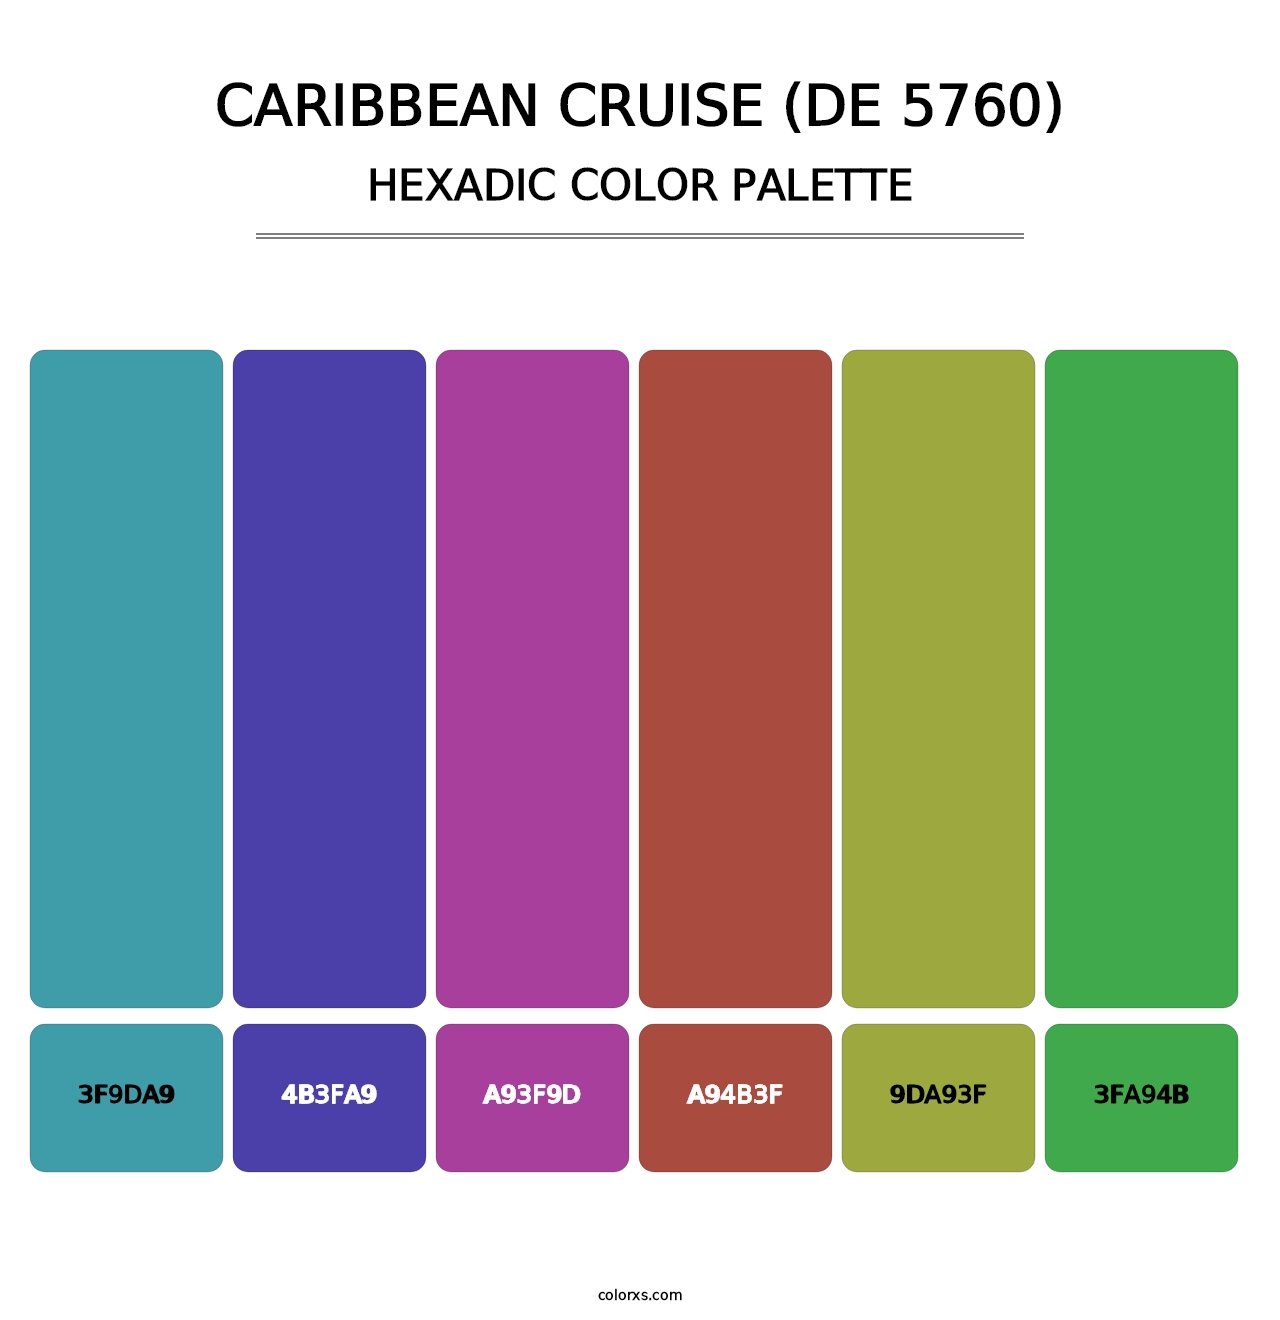 Caribbean Cruise (DE 5760) - Hexadic Color Palette